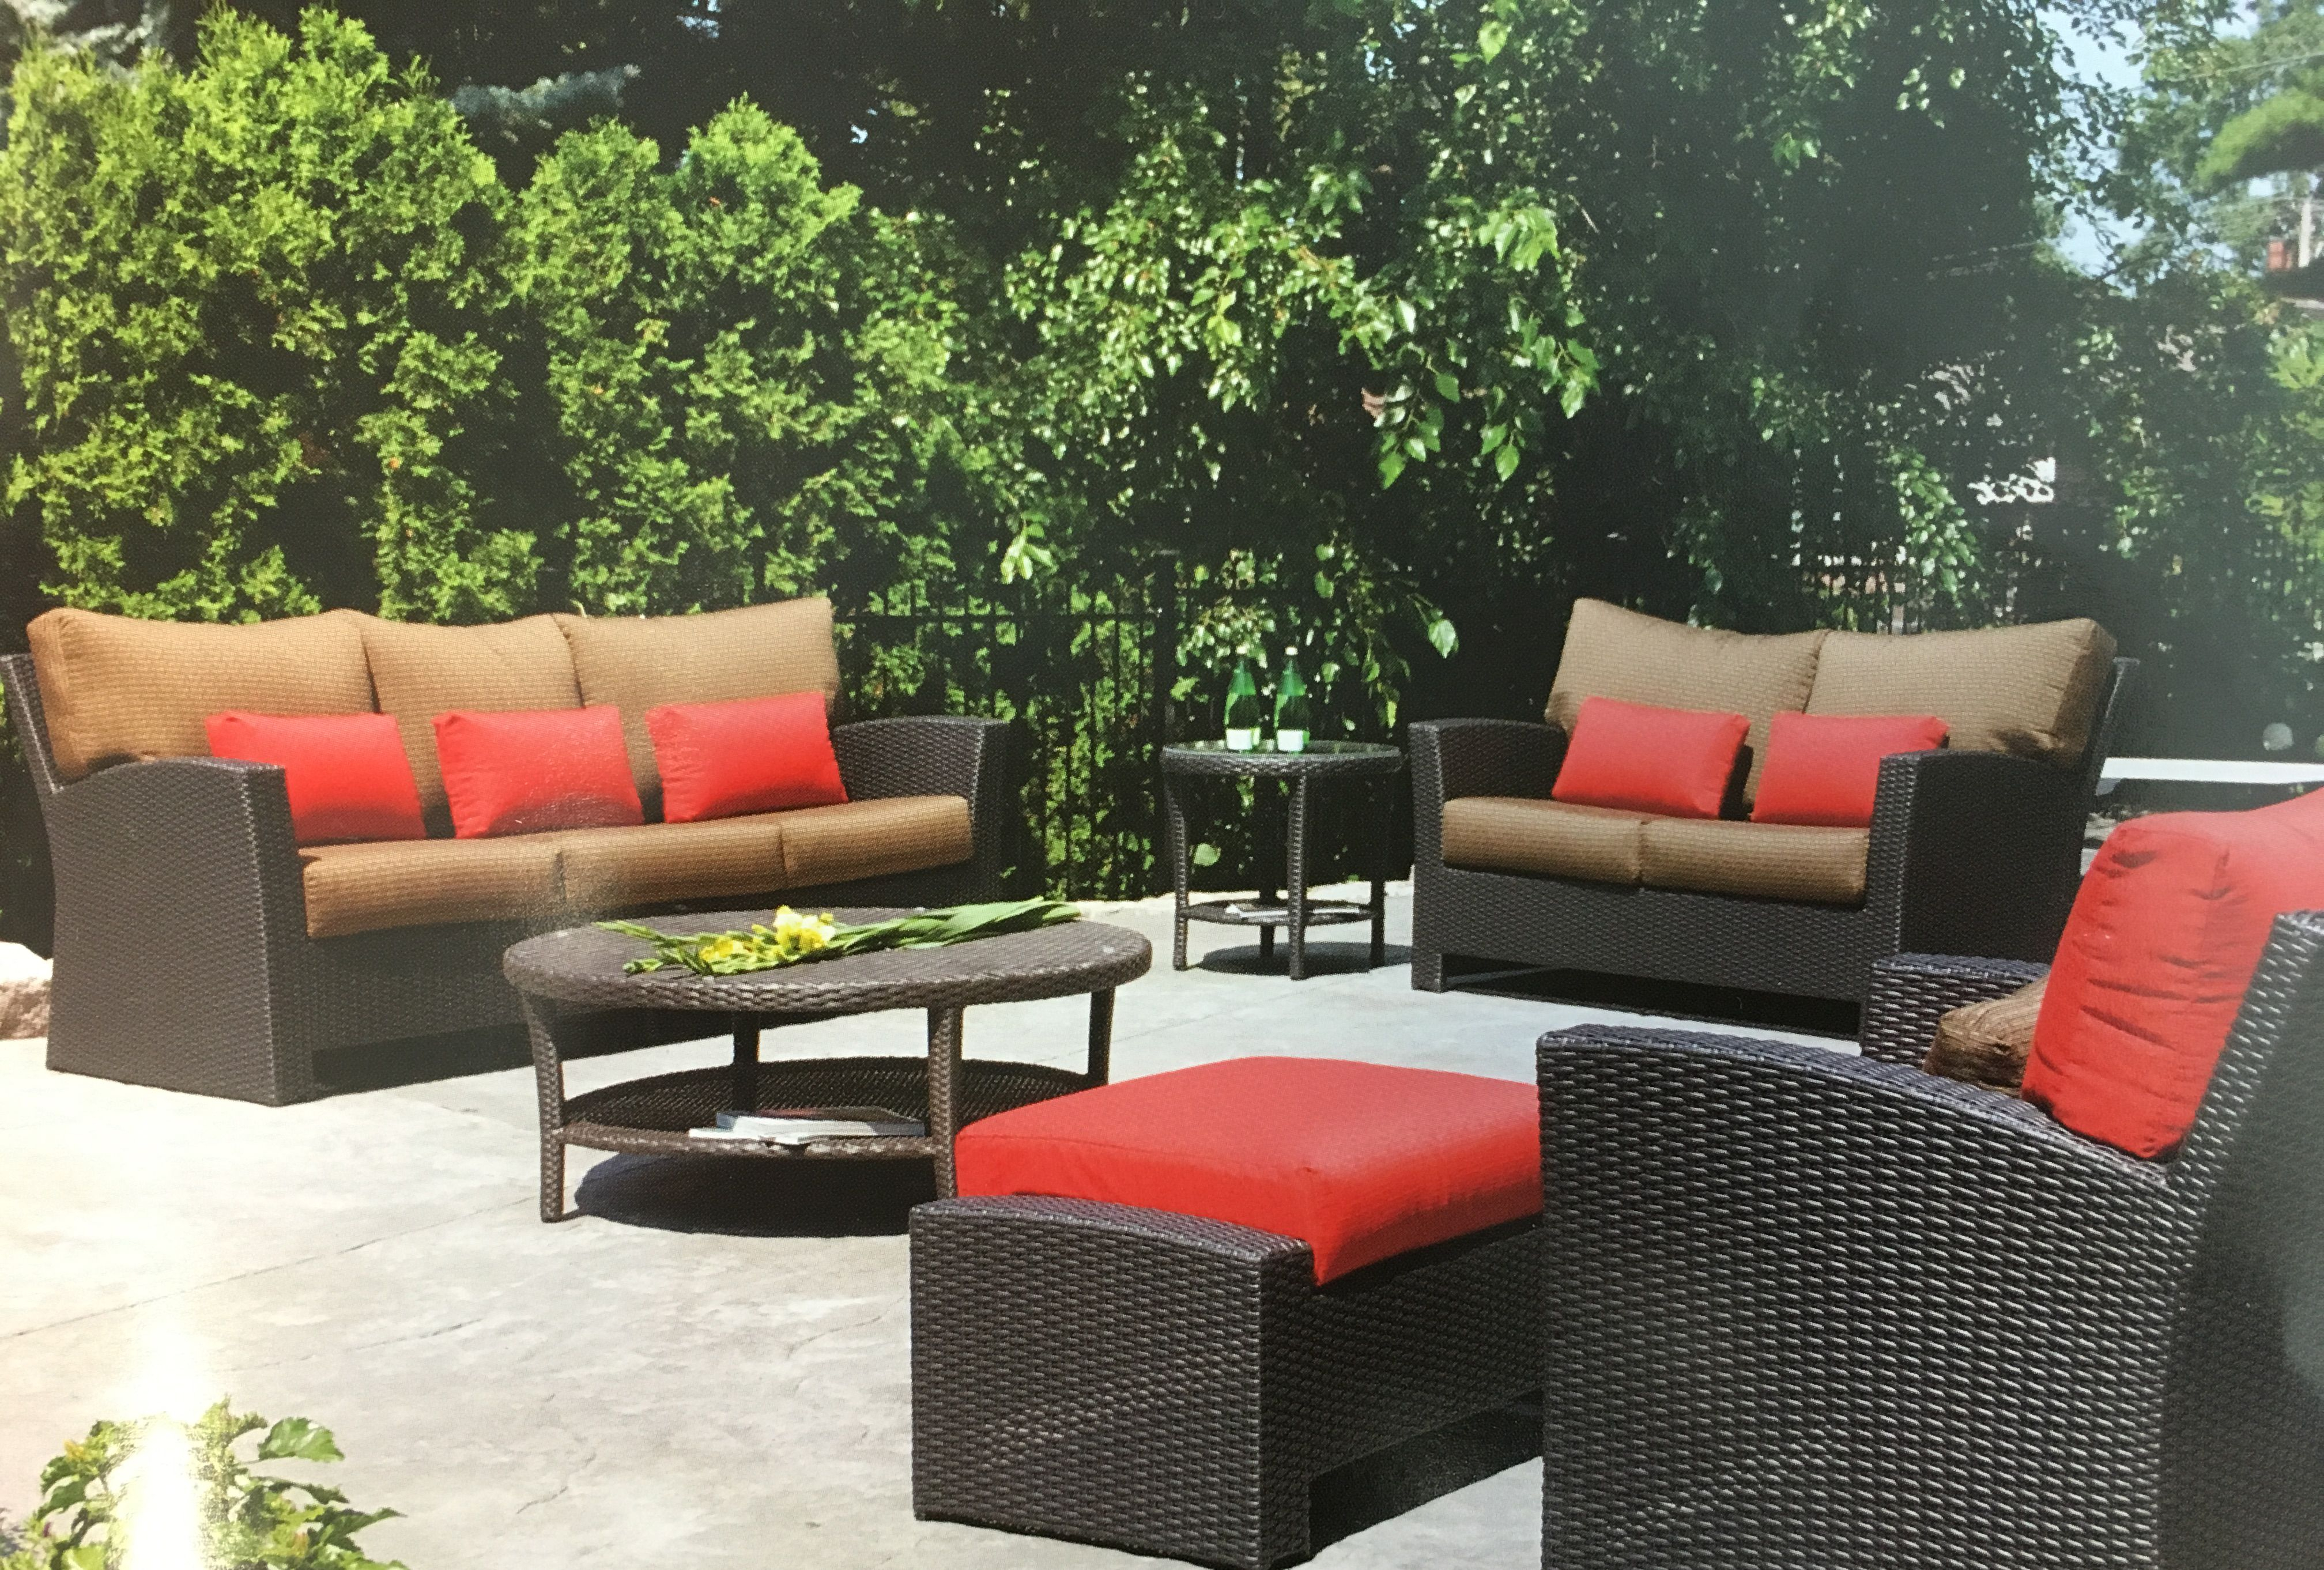 Patio Furniture Cabanacoast Patio Summer Outdoor regarding size 4032 X 2724